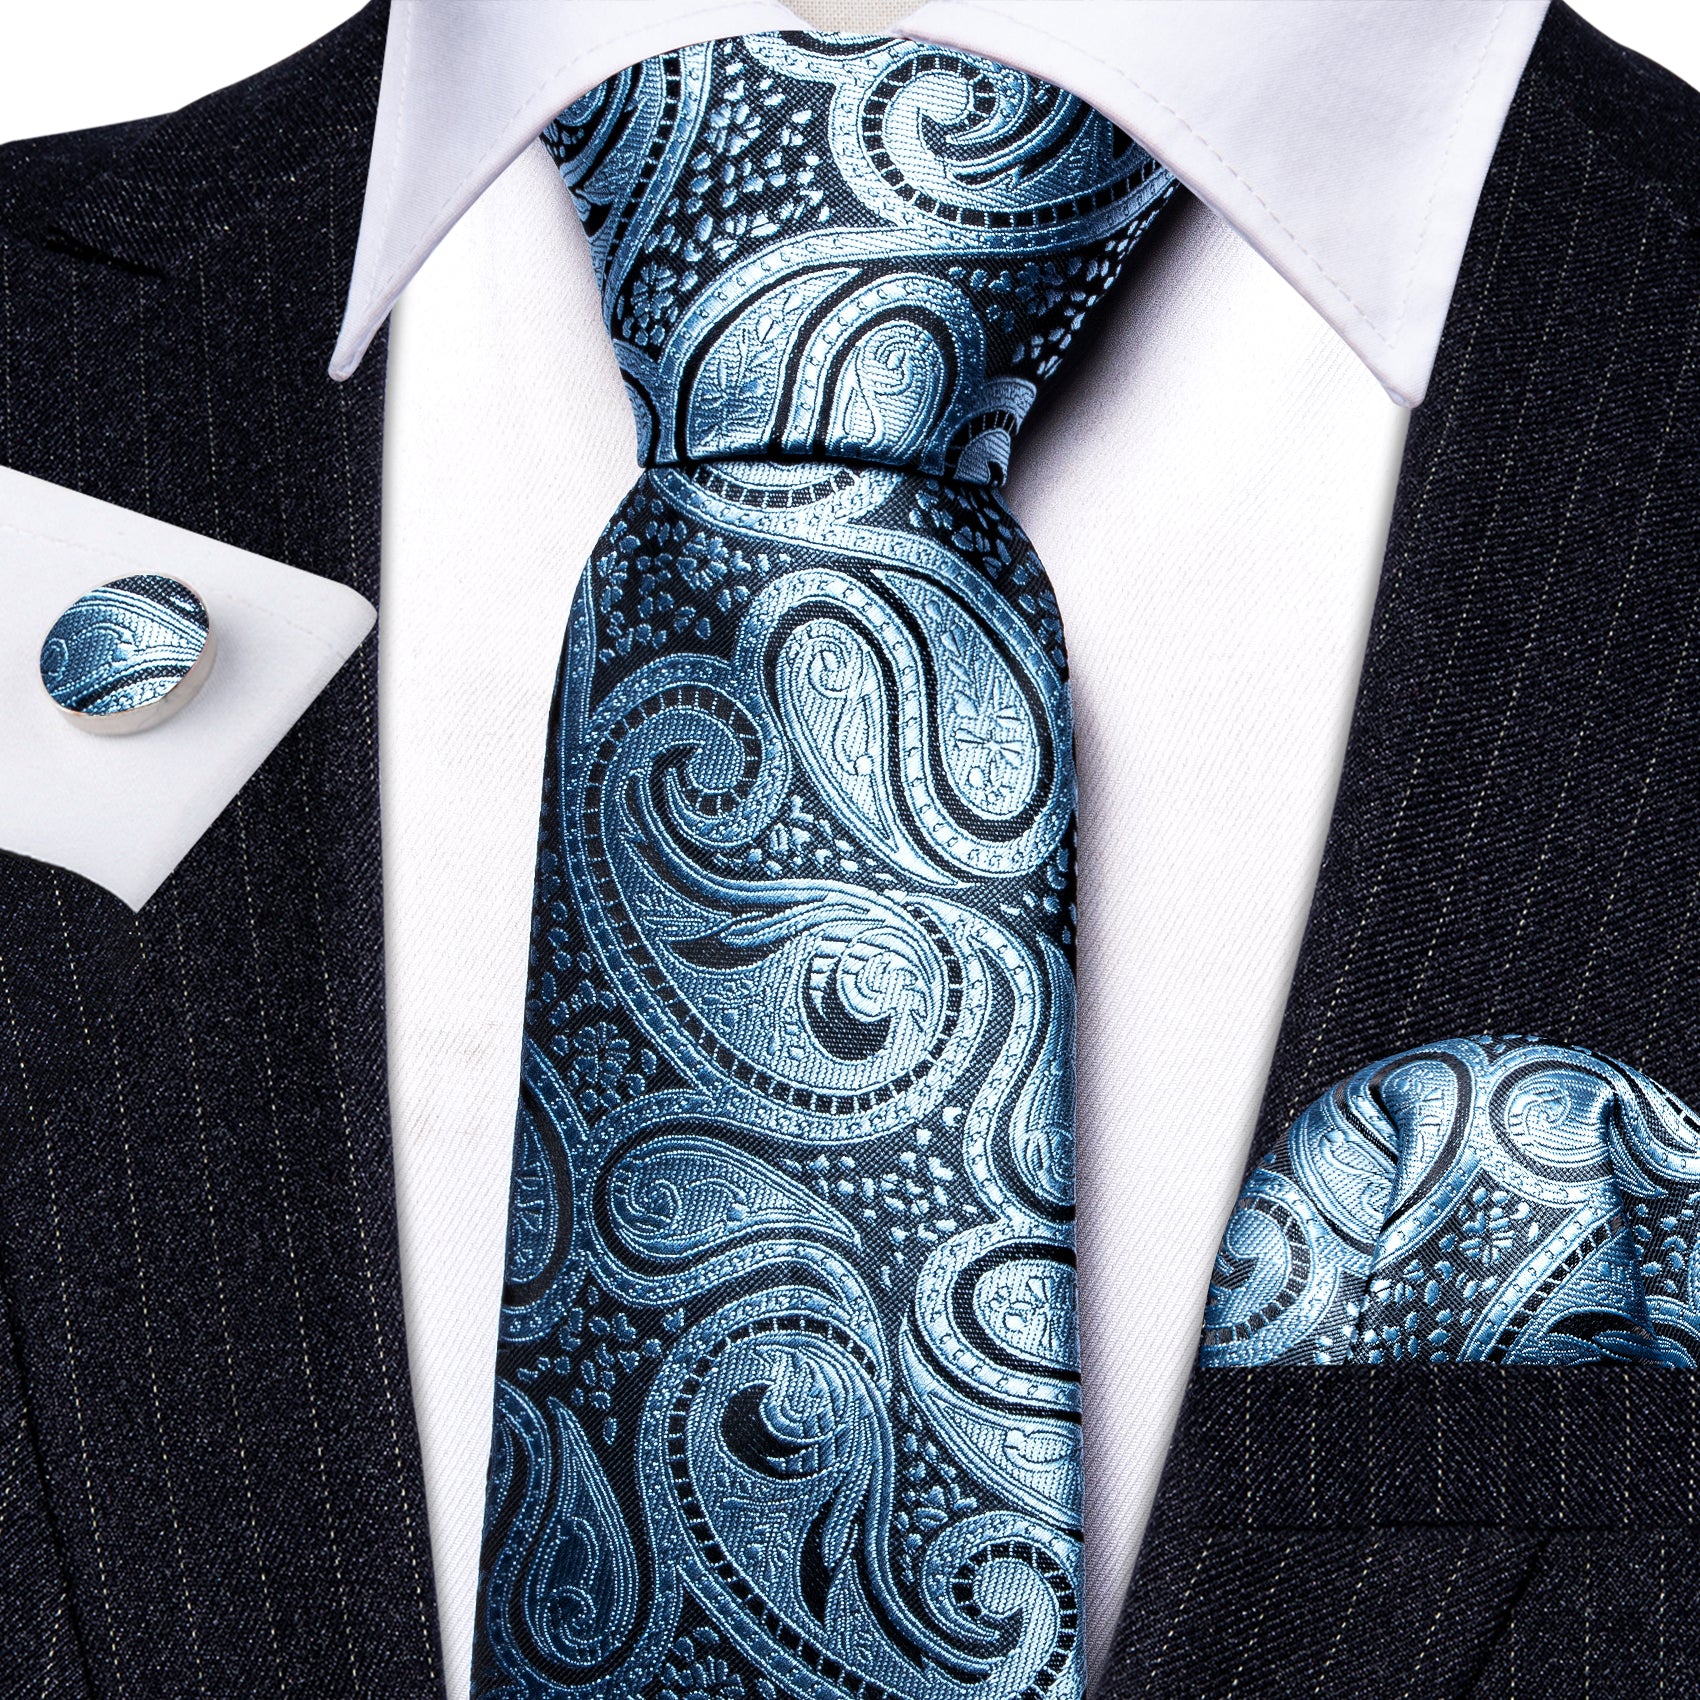 Light Blue Paisley Silk Tie Handkerchief Cufflinks Set For Men